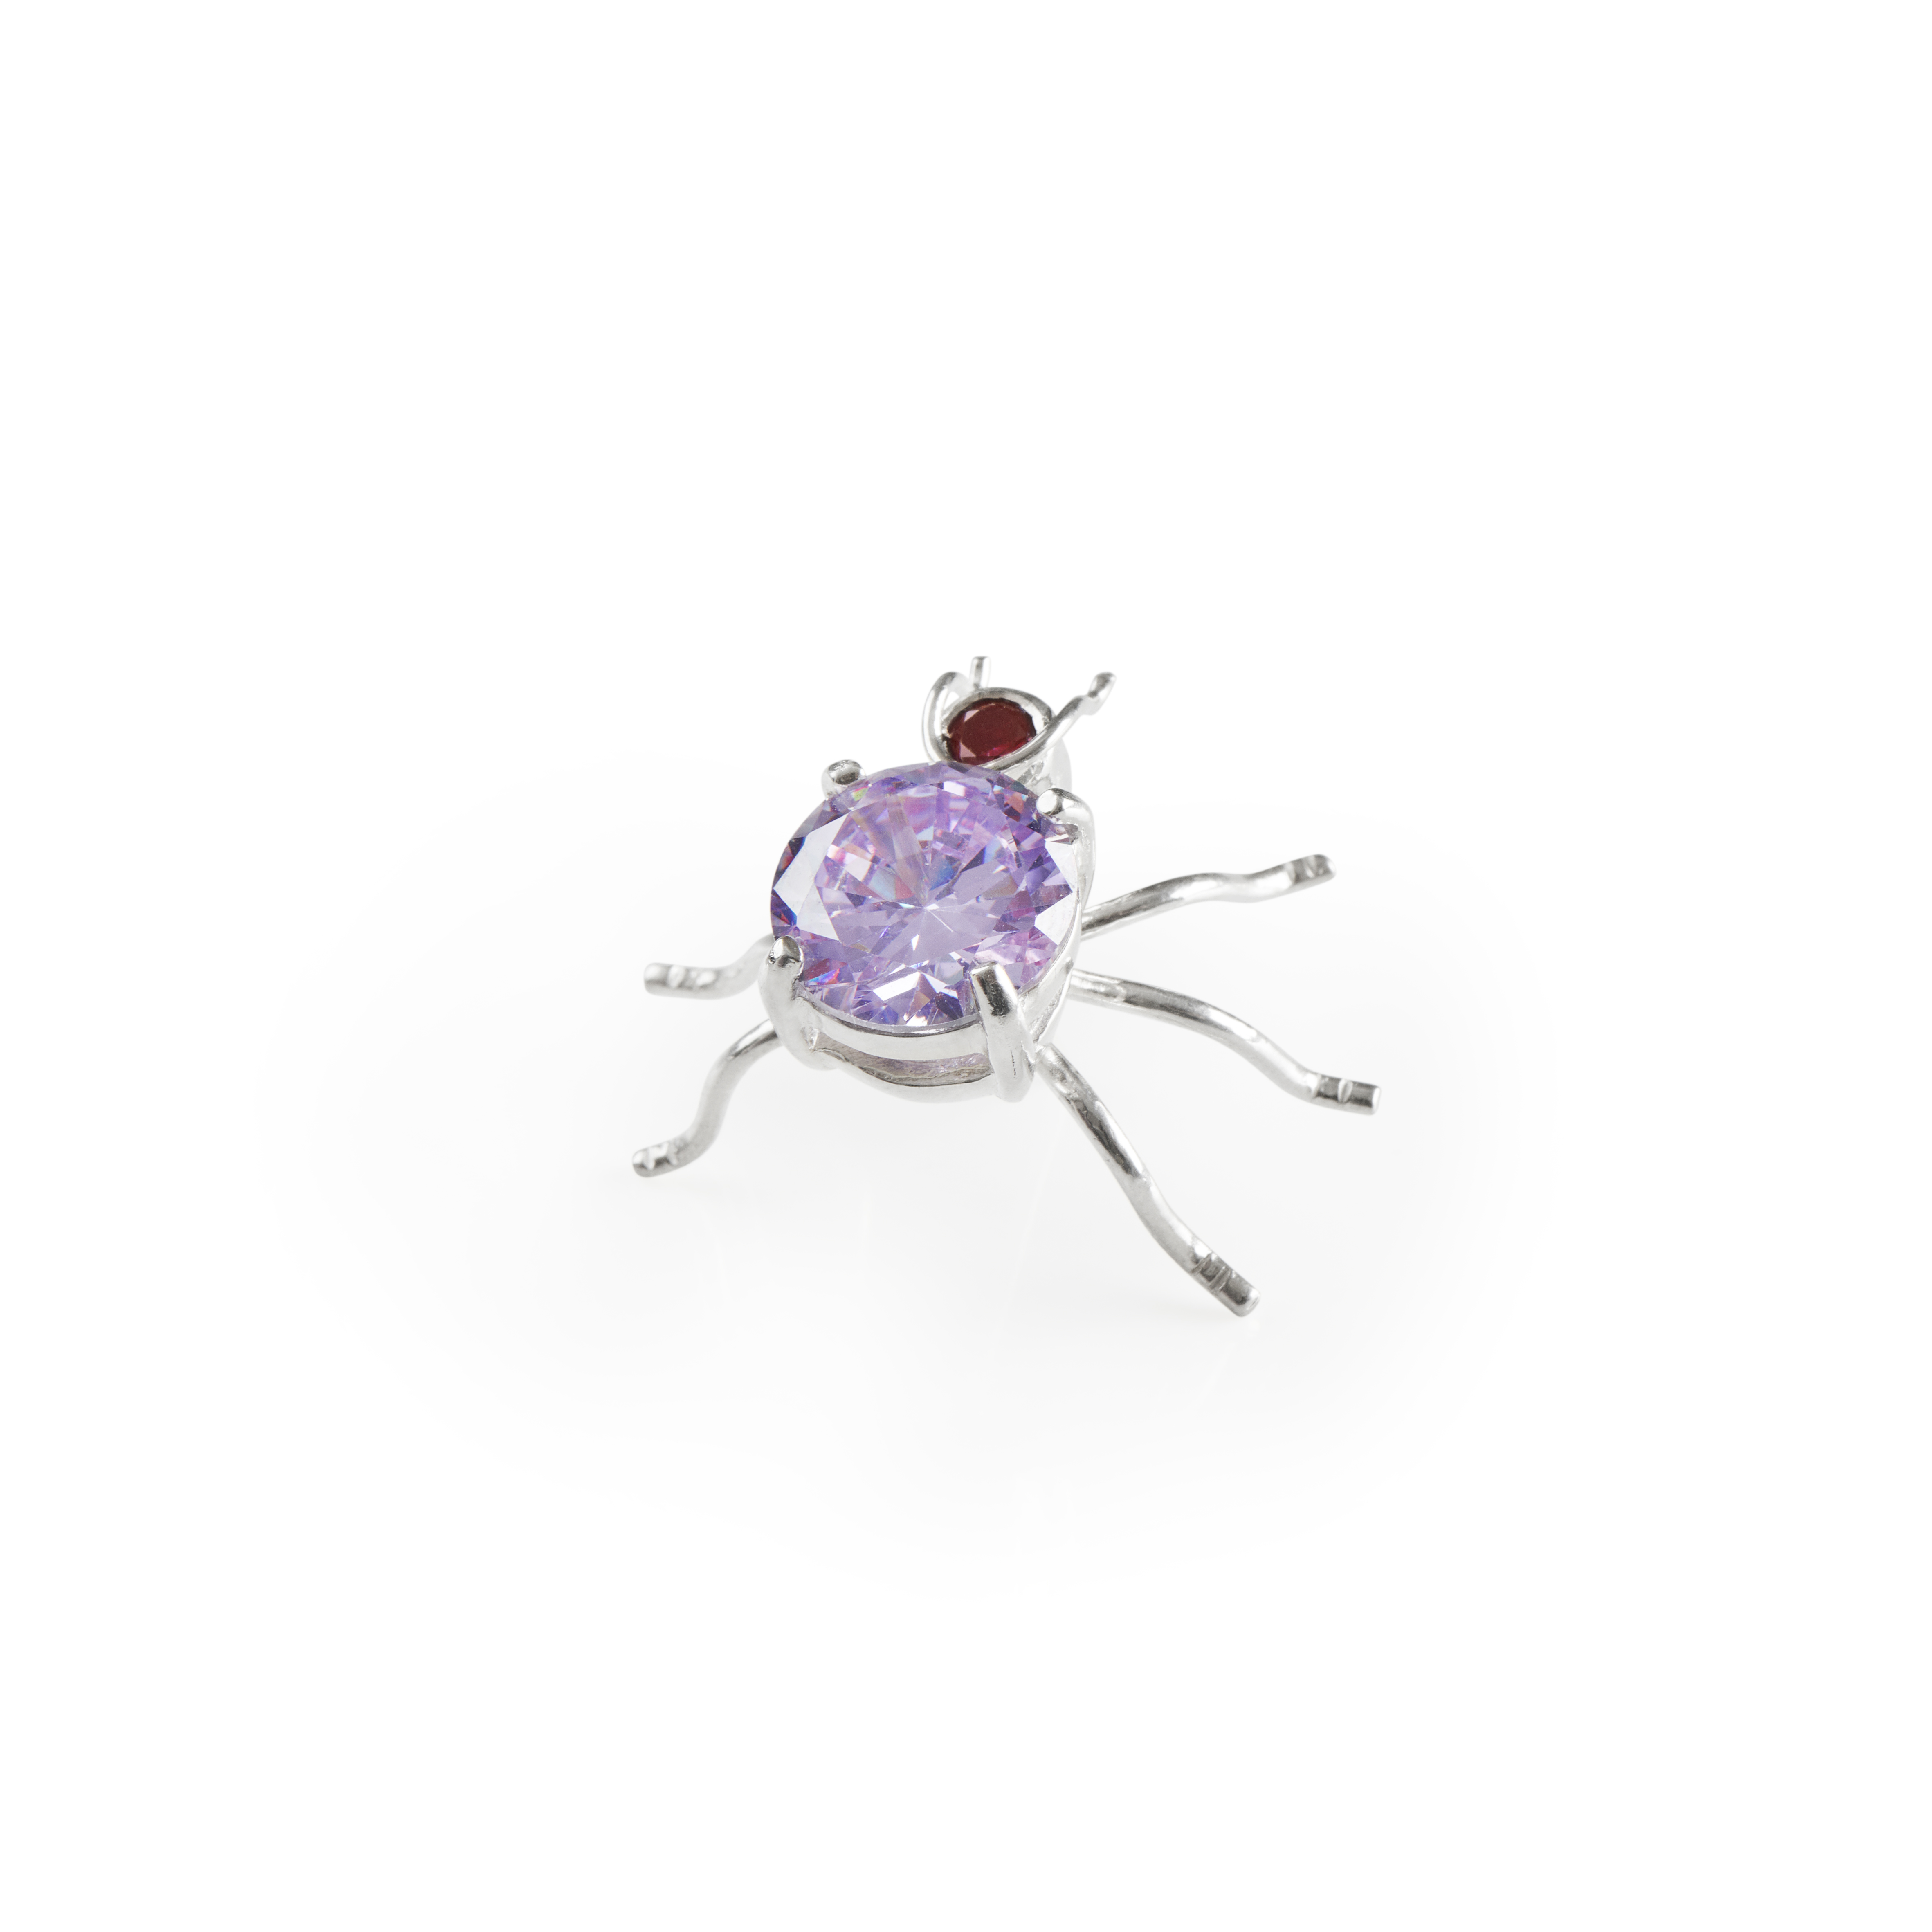 Bug with Lilac Gemstone - Round  - Image 1